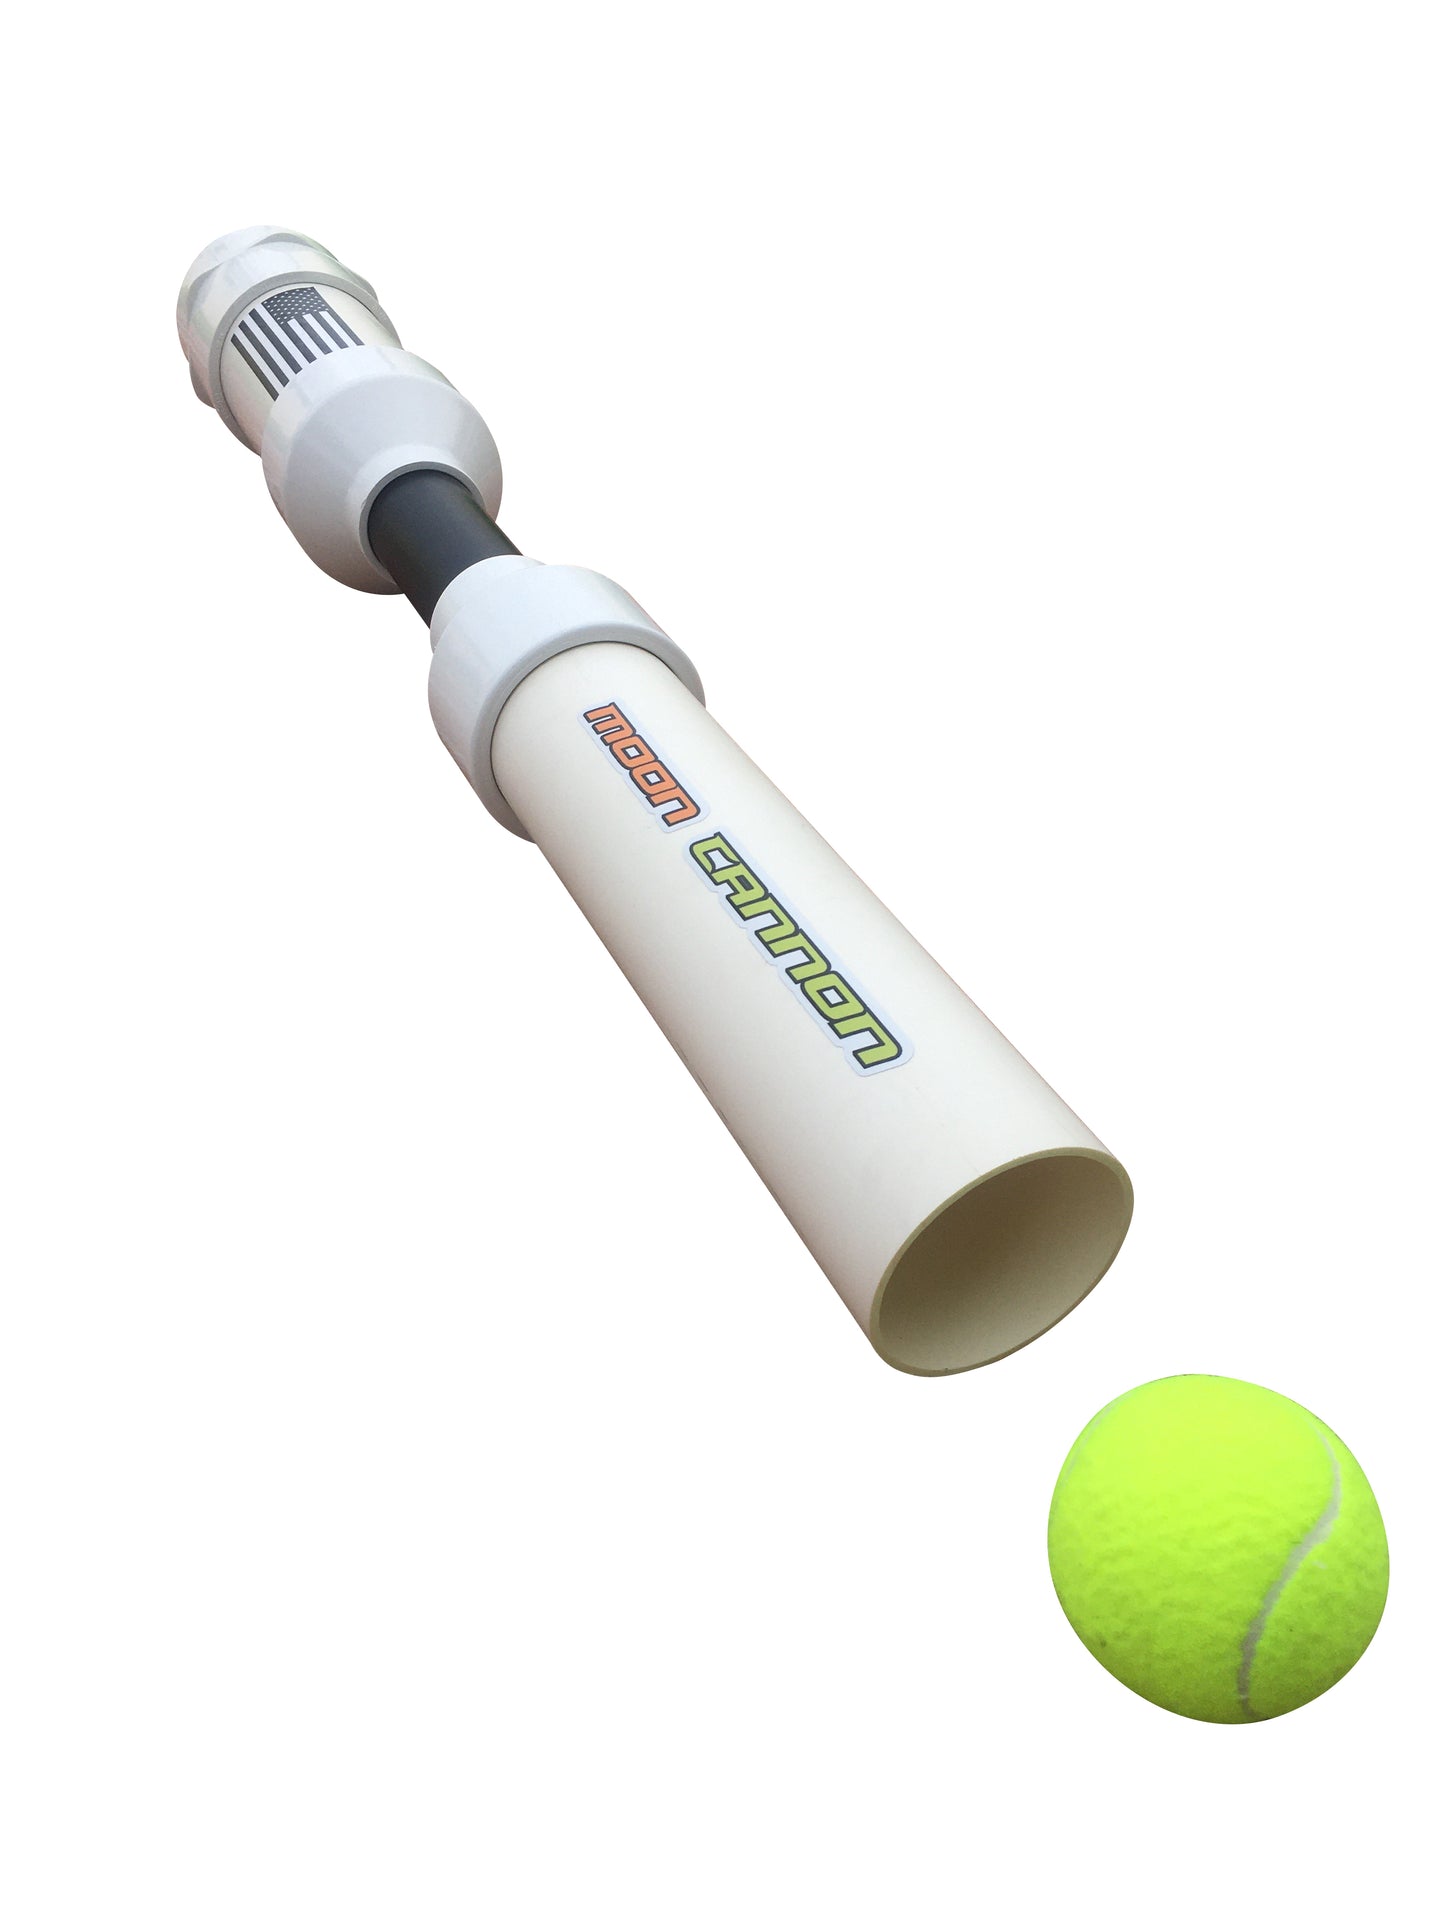 Moon Cannon Tennis Ball Launcher, Tennis Ball Gun